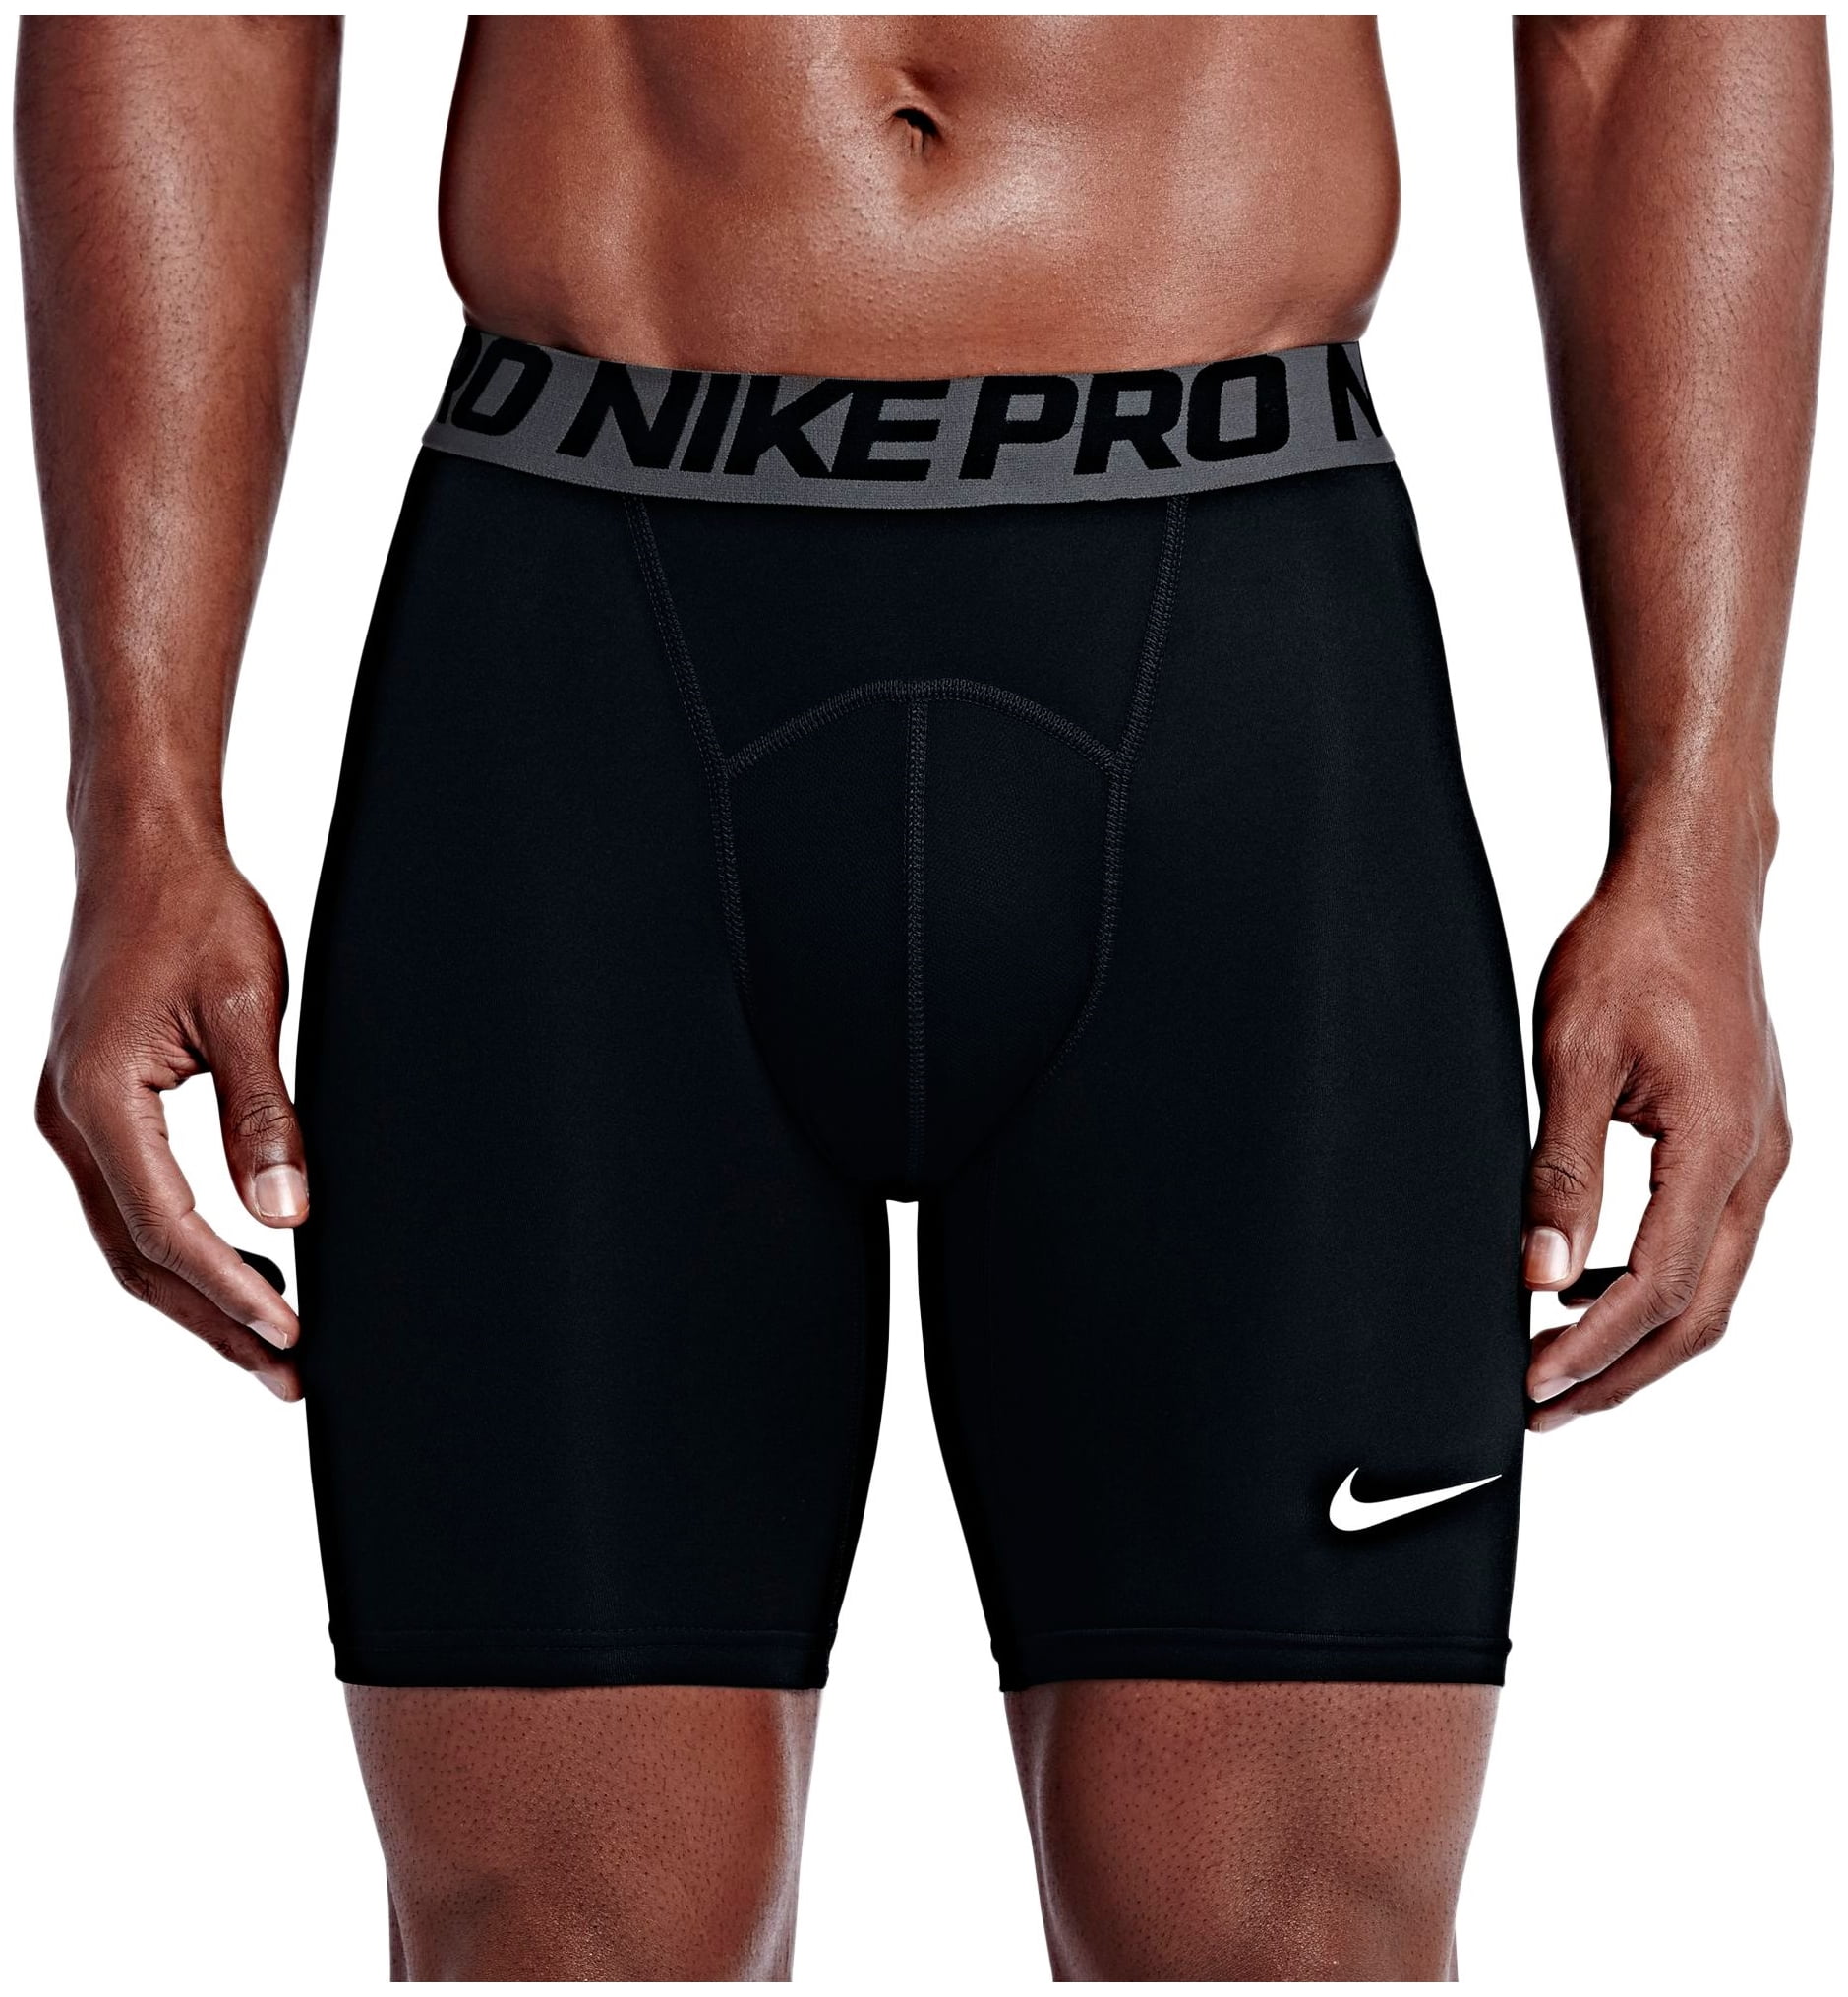 nike pro combat men's 6 compression shorts underwear black size